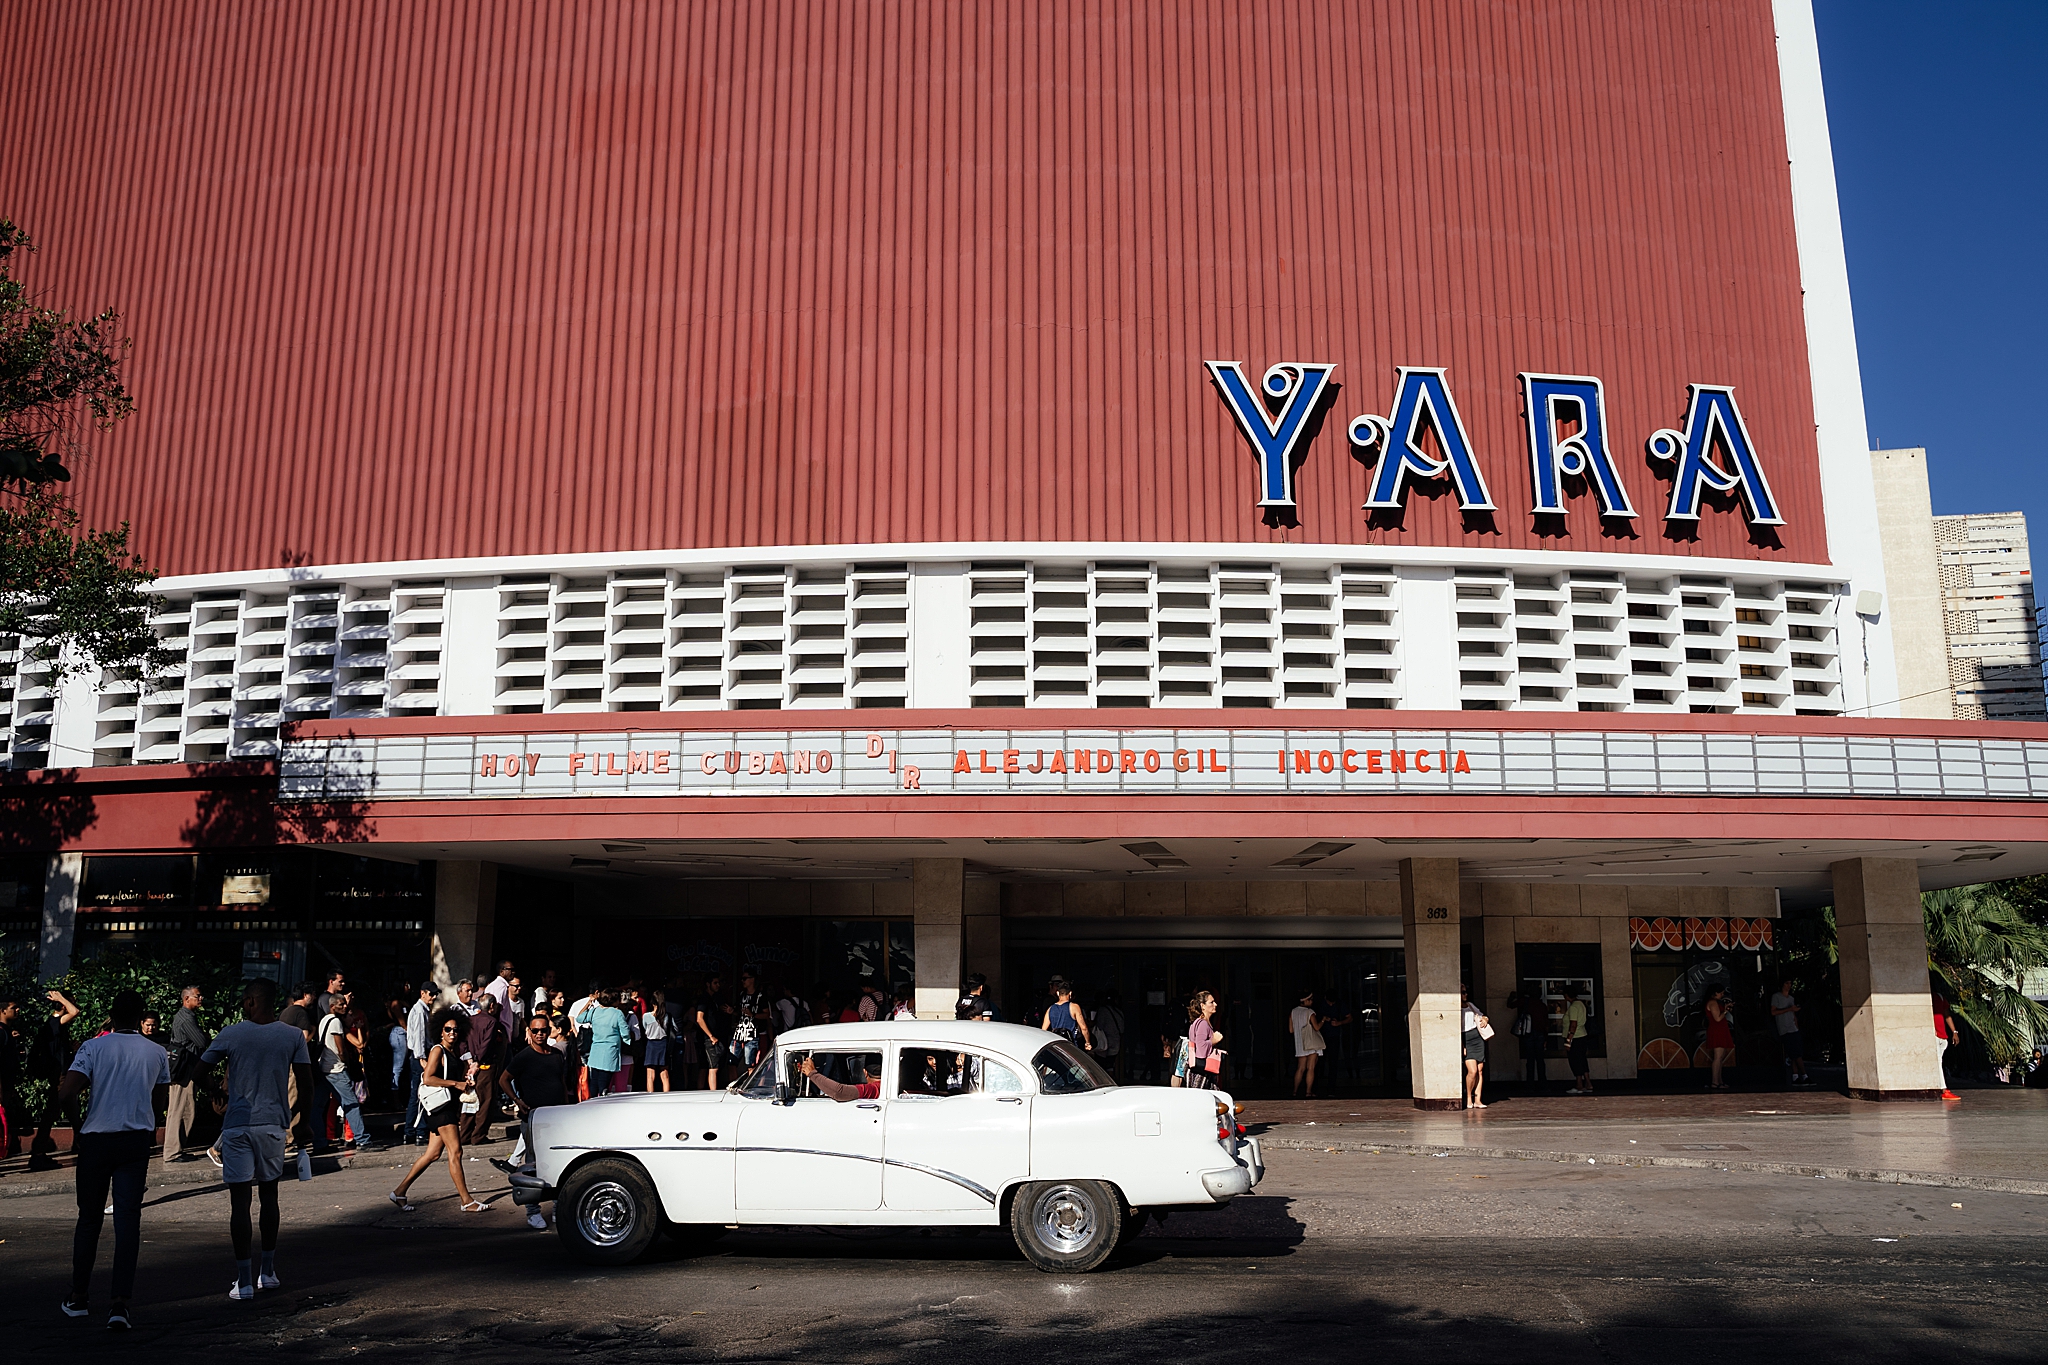  The famous Yara theater in the Vedado neighborhood of Havana Cuba.  